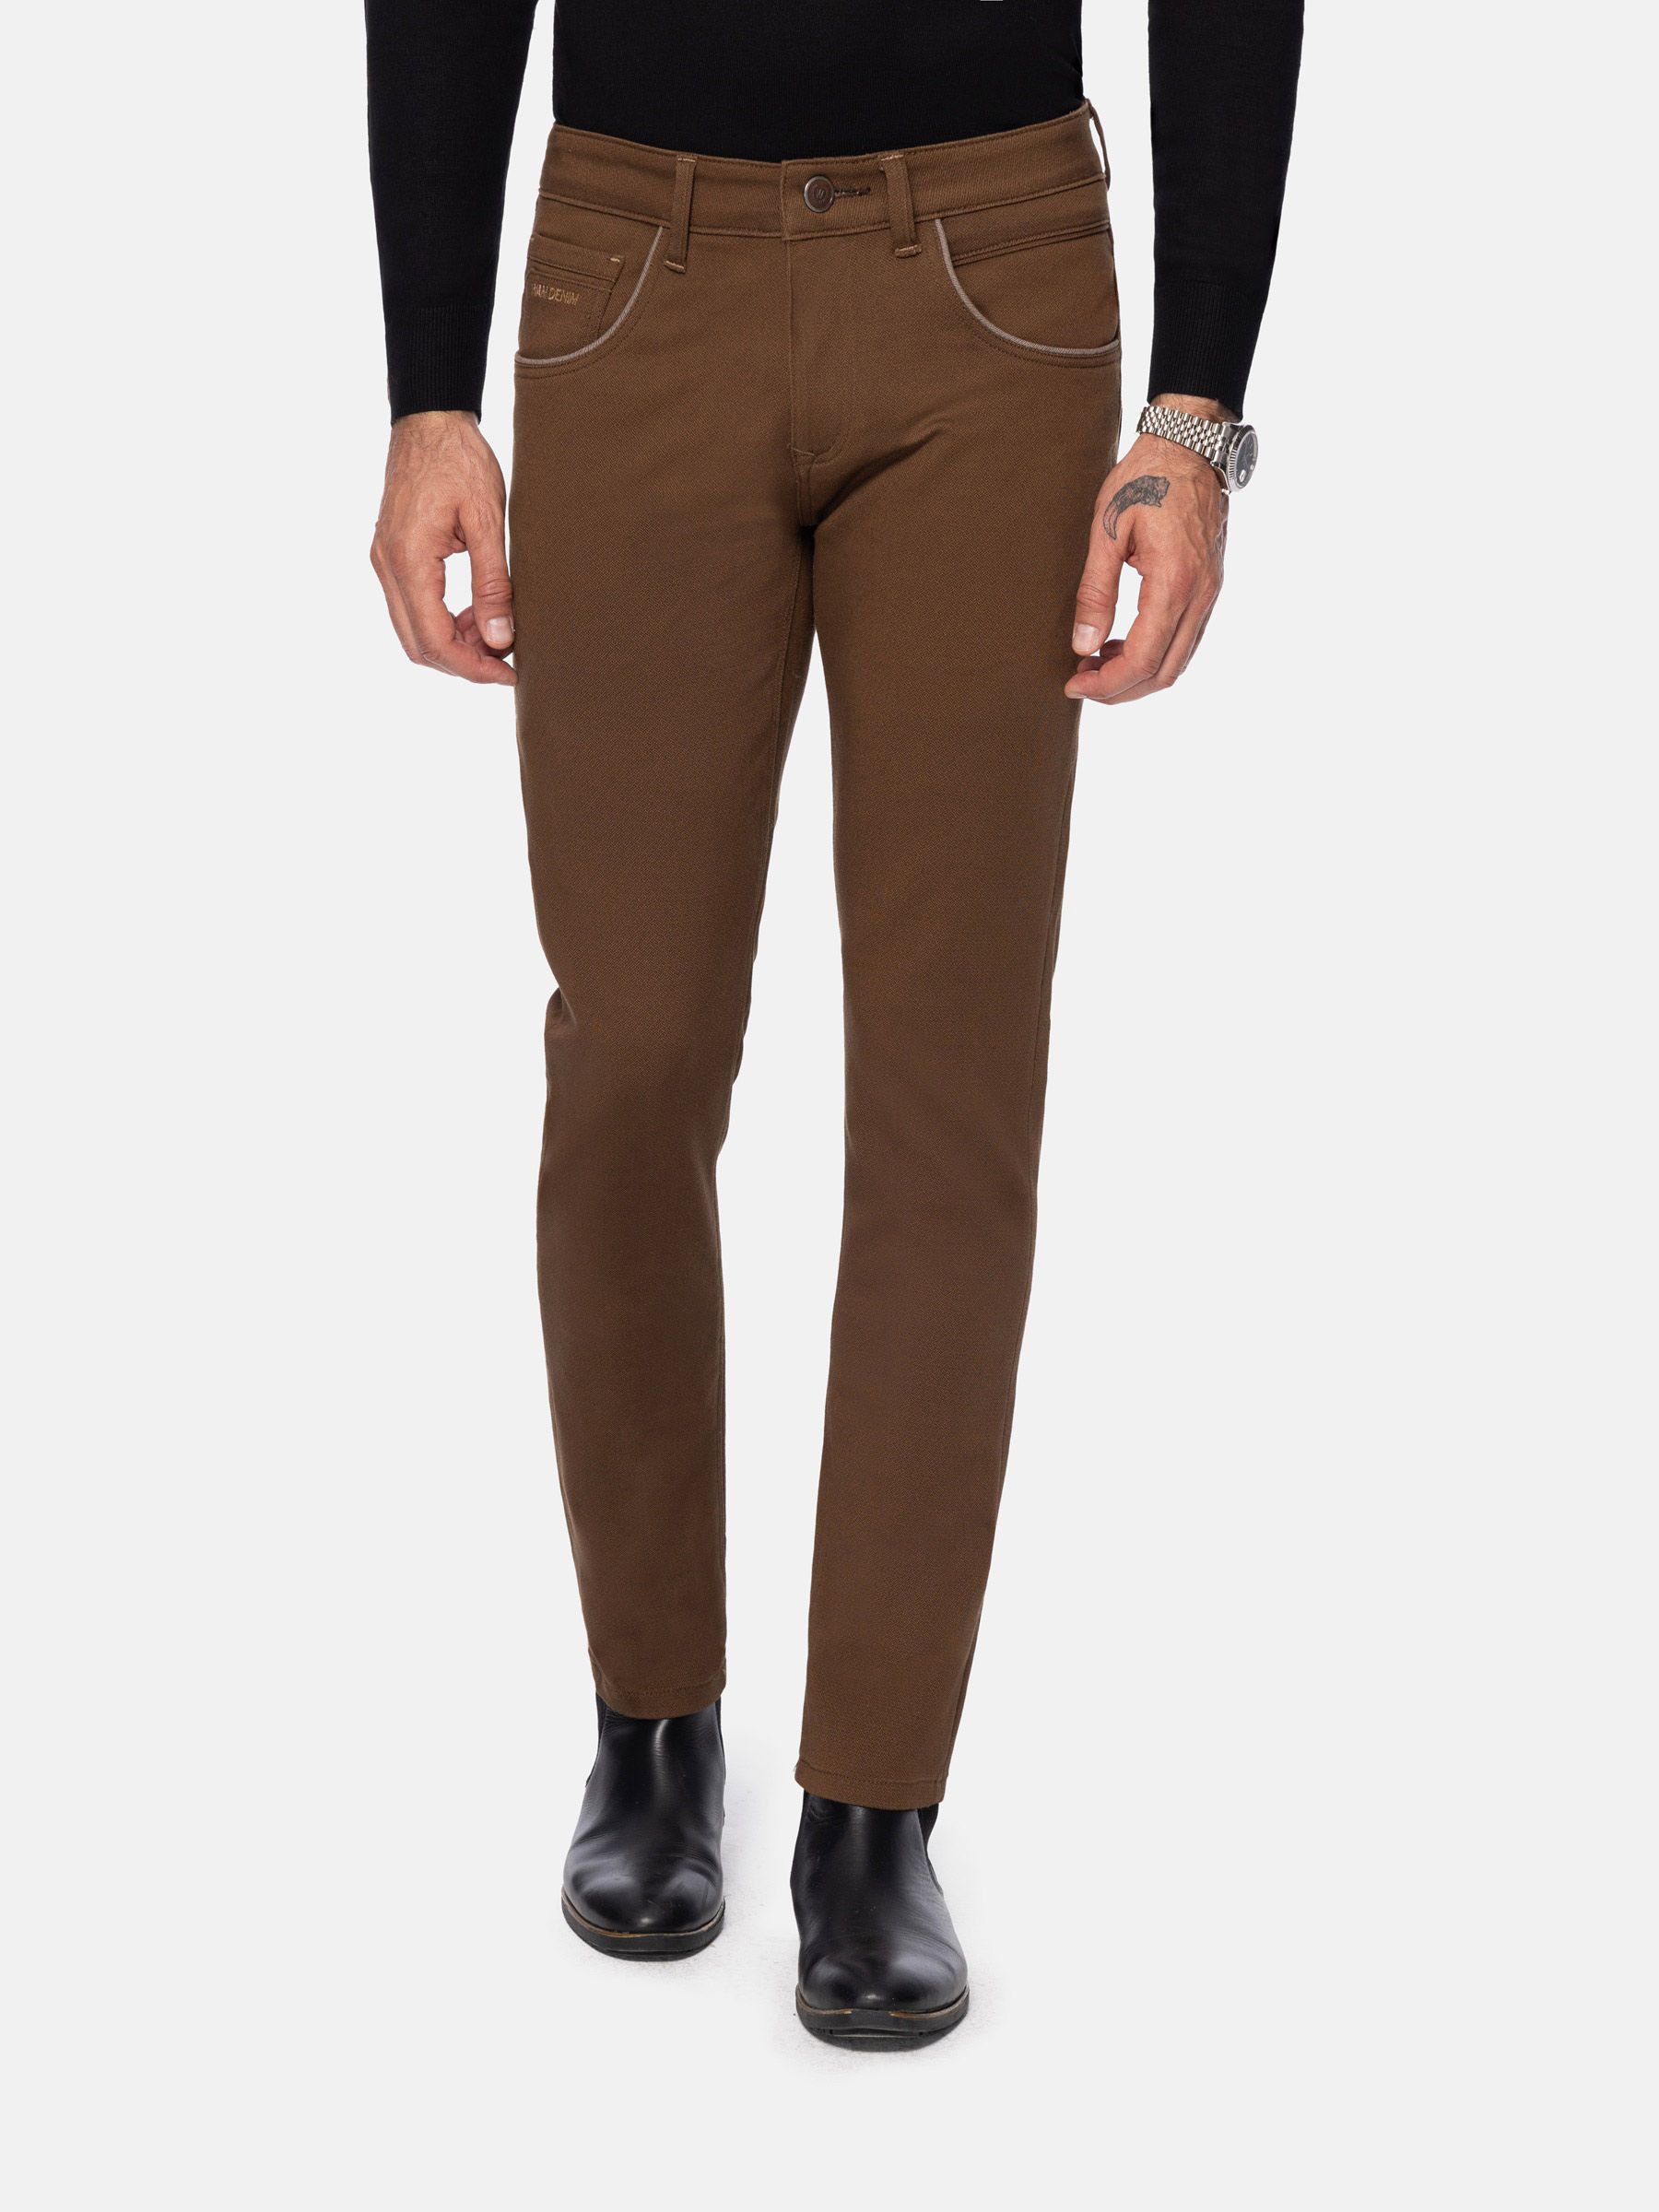 Super Slim-fit Pants - Light taupe - Ladies | H&M US